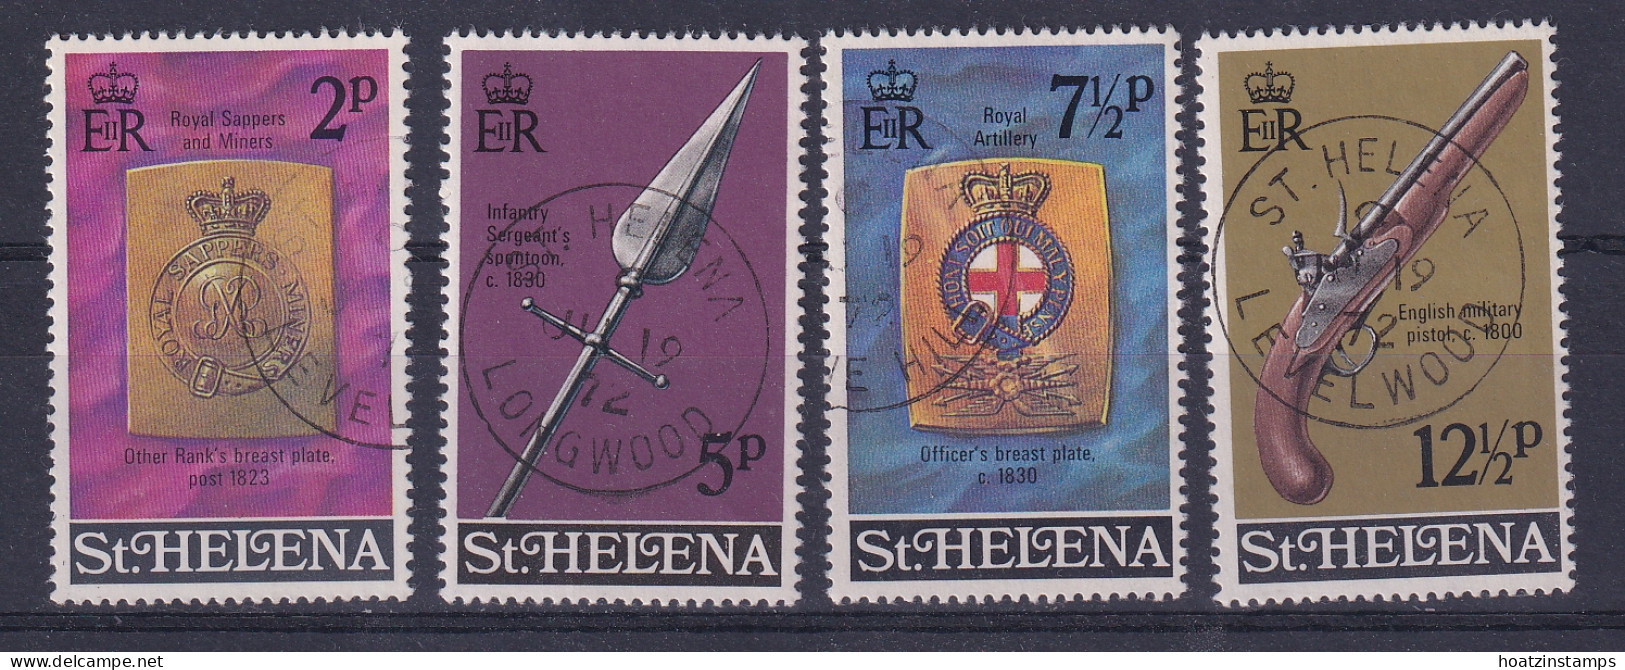 St Helena: 1972   Military Equipment (Issue 3)    Used - Saint Helena Island